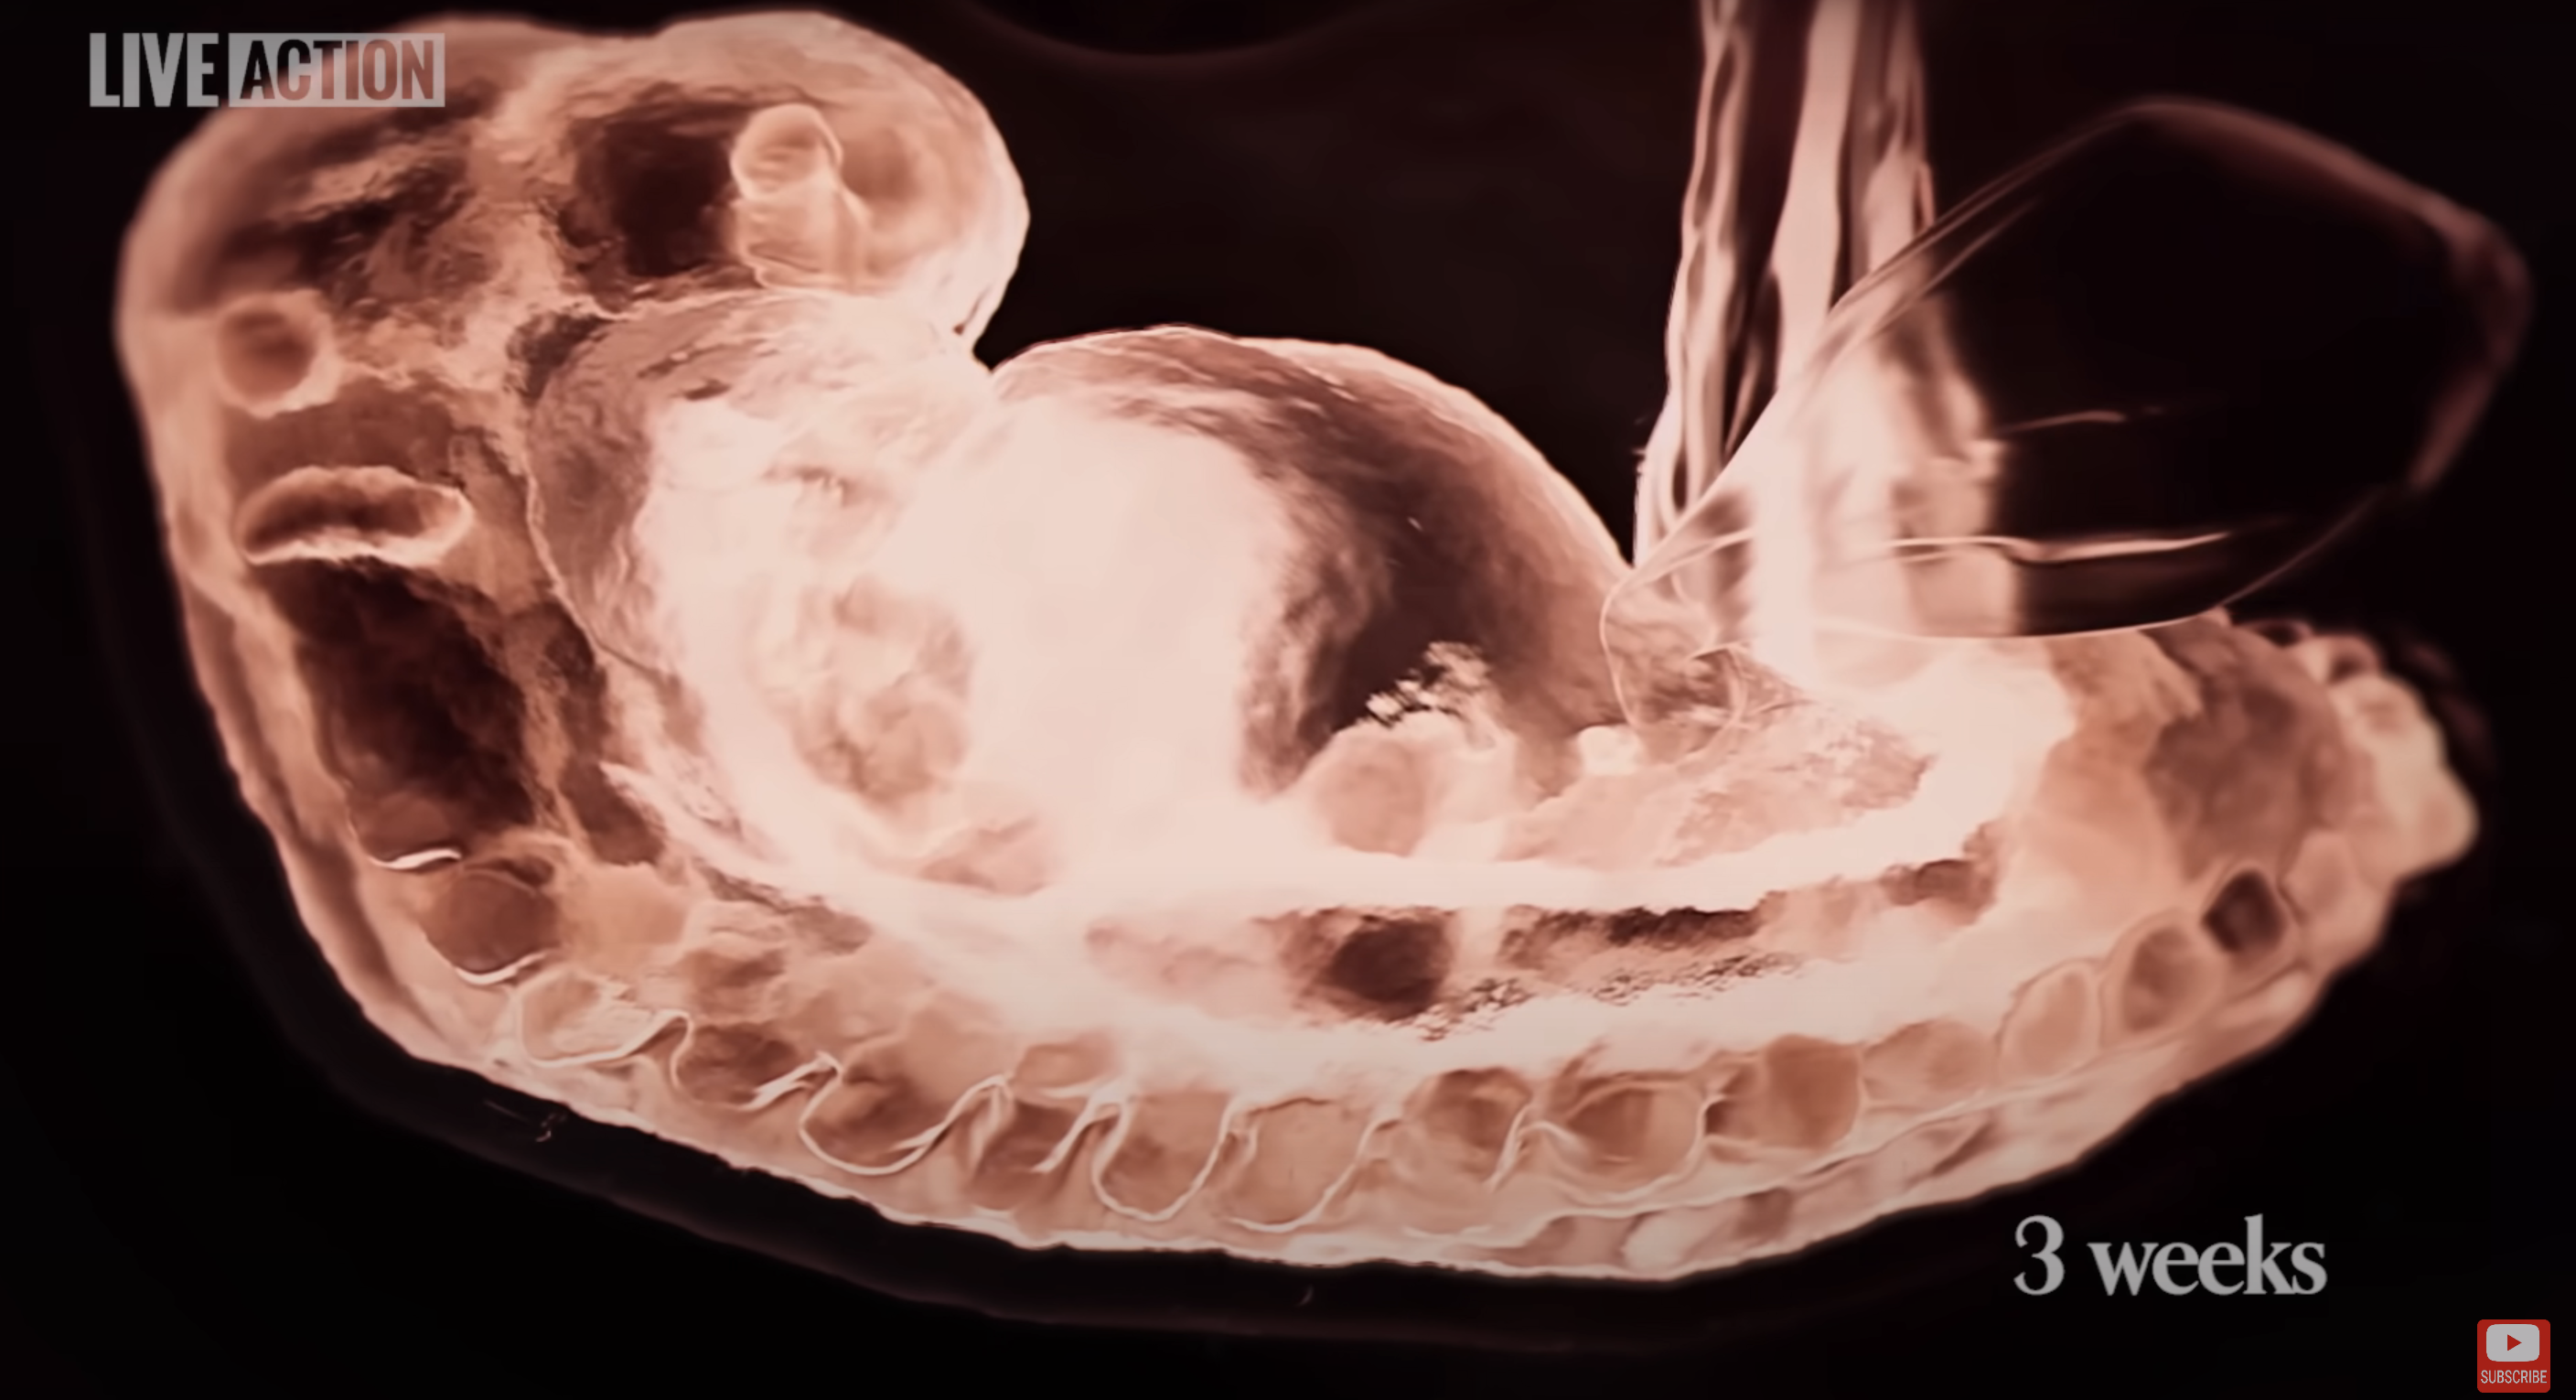 A close-up image of a developing human embryo